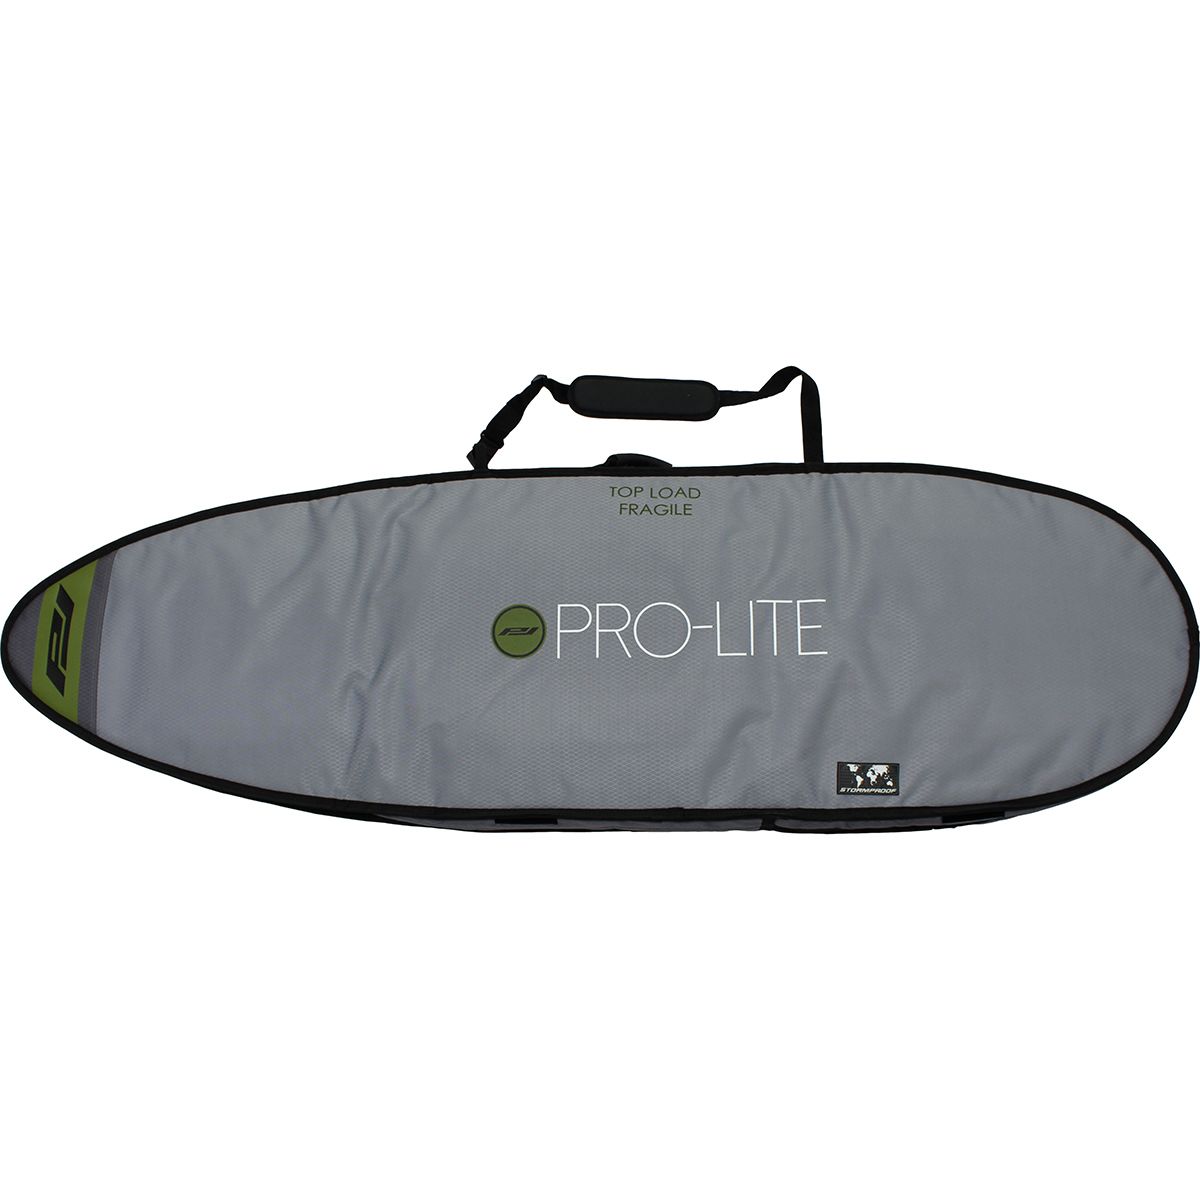 Pro-Lite Rhino Single/Double Travel Surfboard Bag - Short